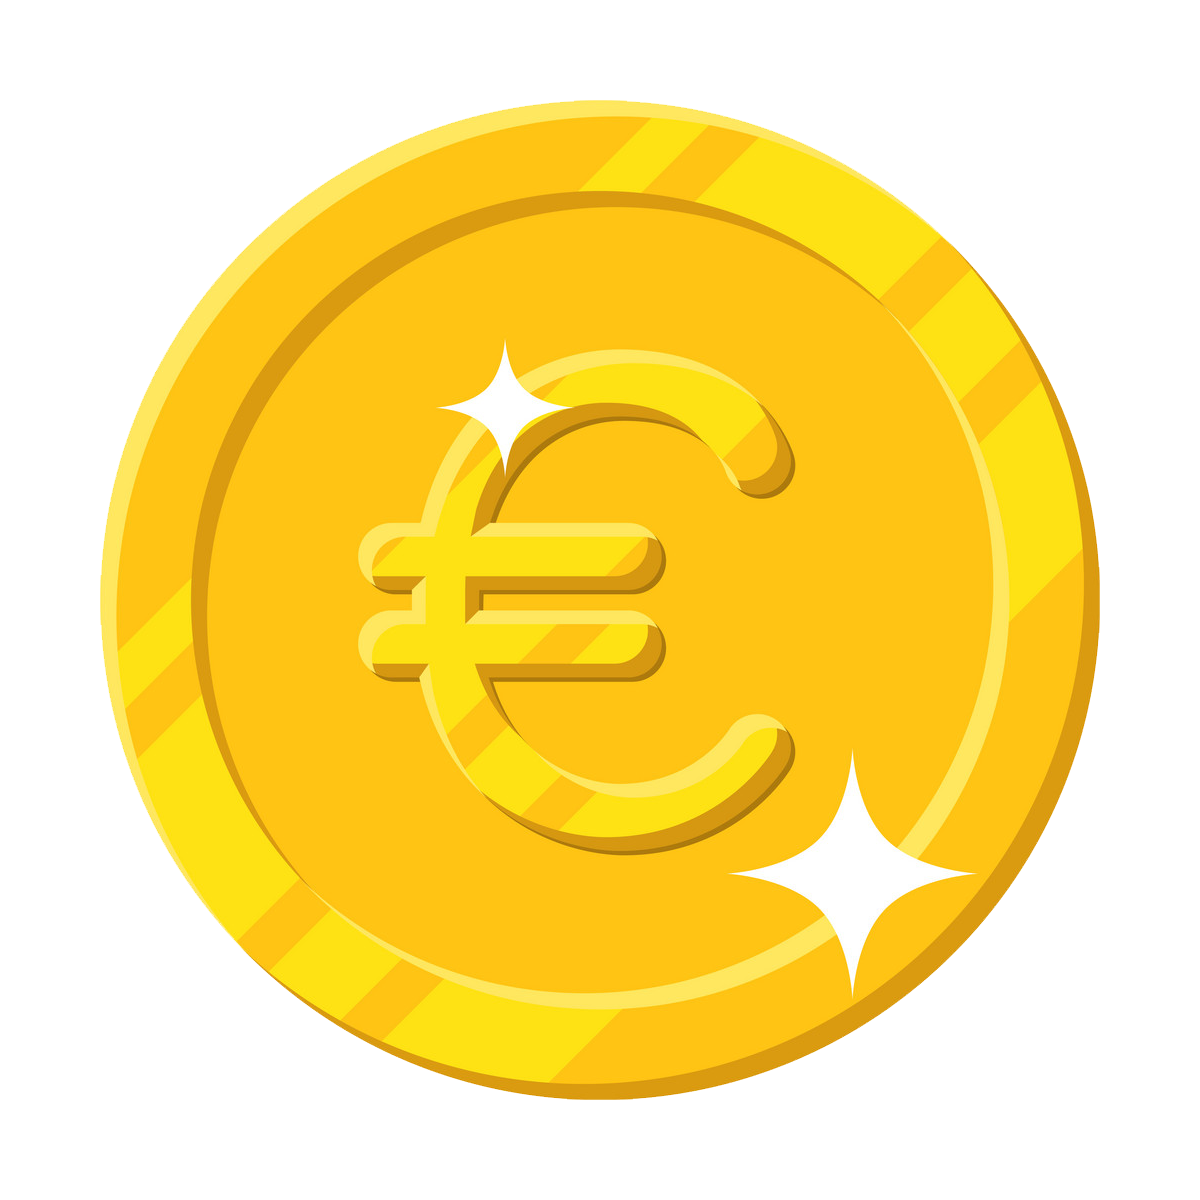 Euro Sign Transparent Image